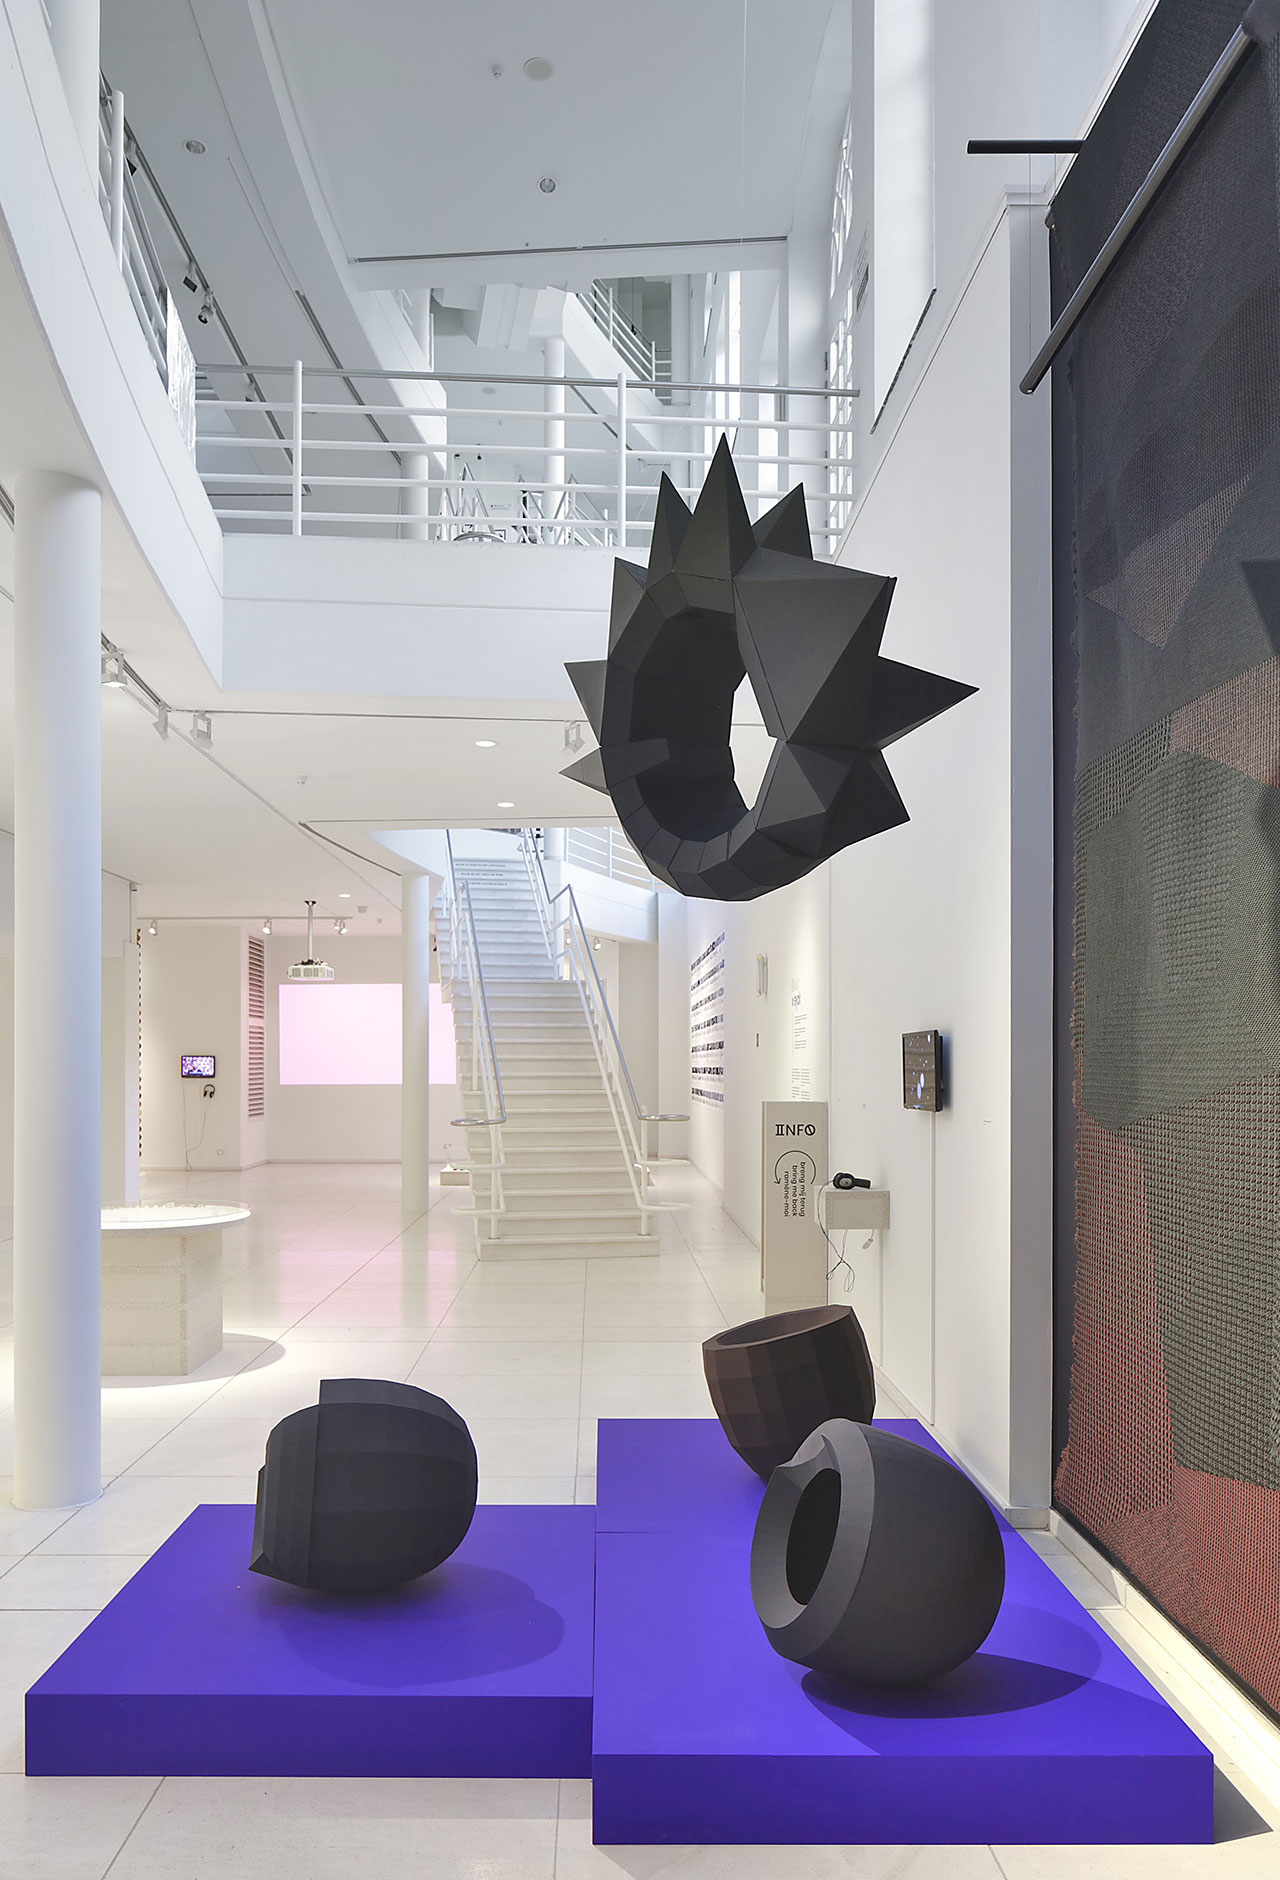 Exhibition view. "Kleureyck. Van Eyck’s Colours in Design" at Design Museum Ghent.
Featured: Hella Jongerius, Colourful Black Installation, 2017-2020.
Photo by Filip Dujardin.